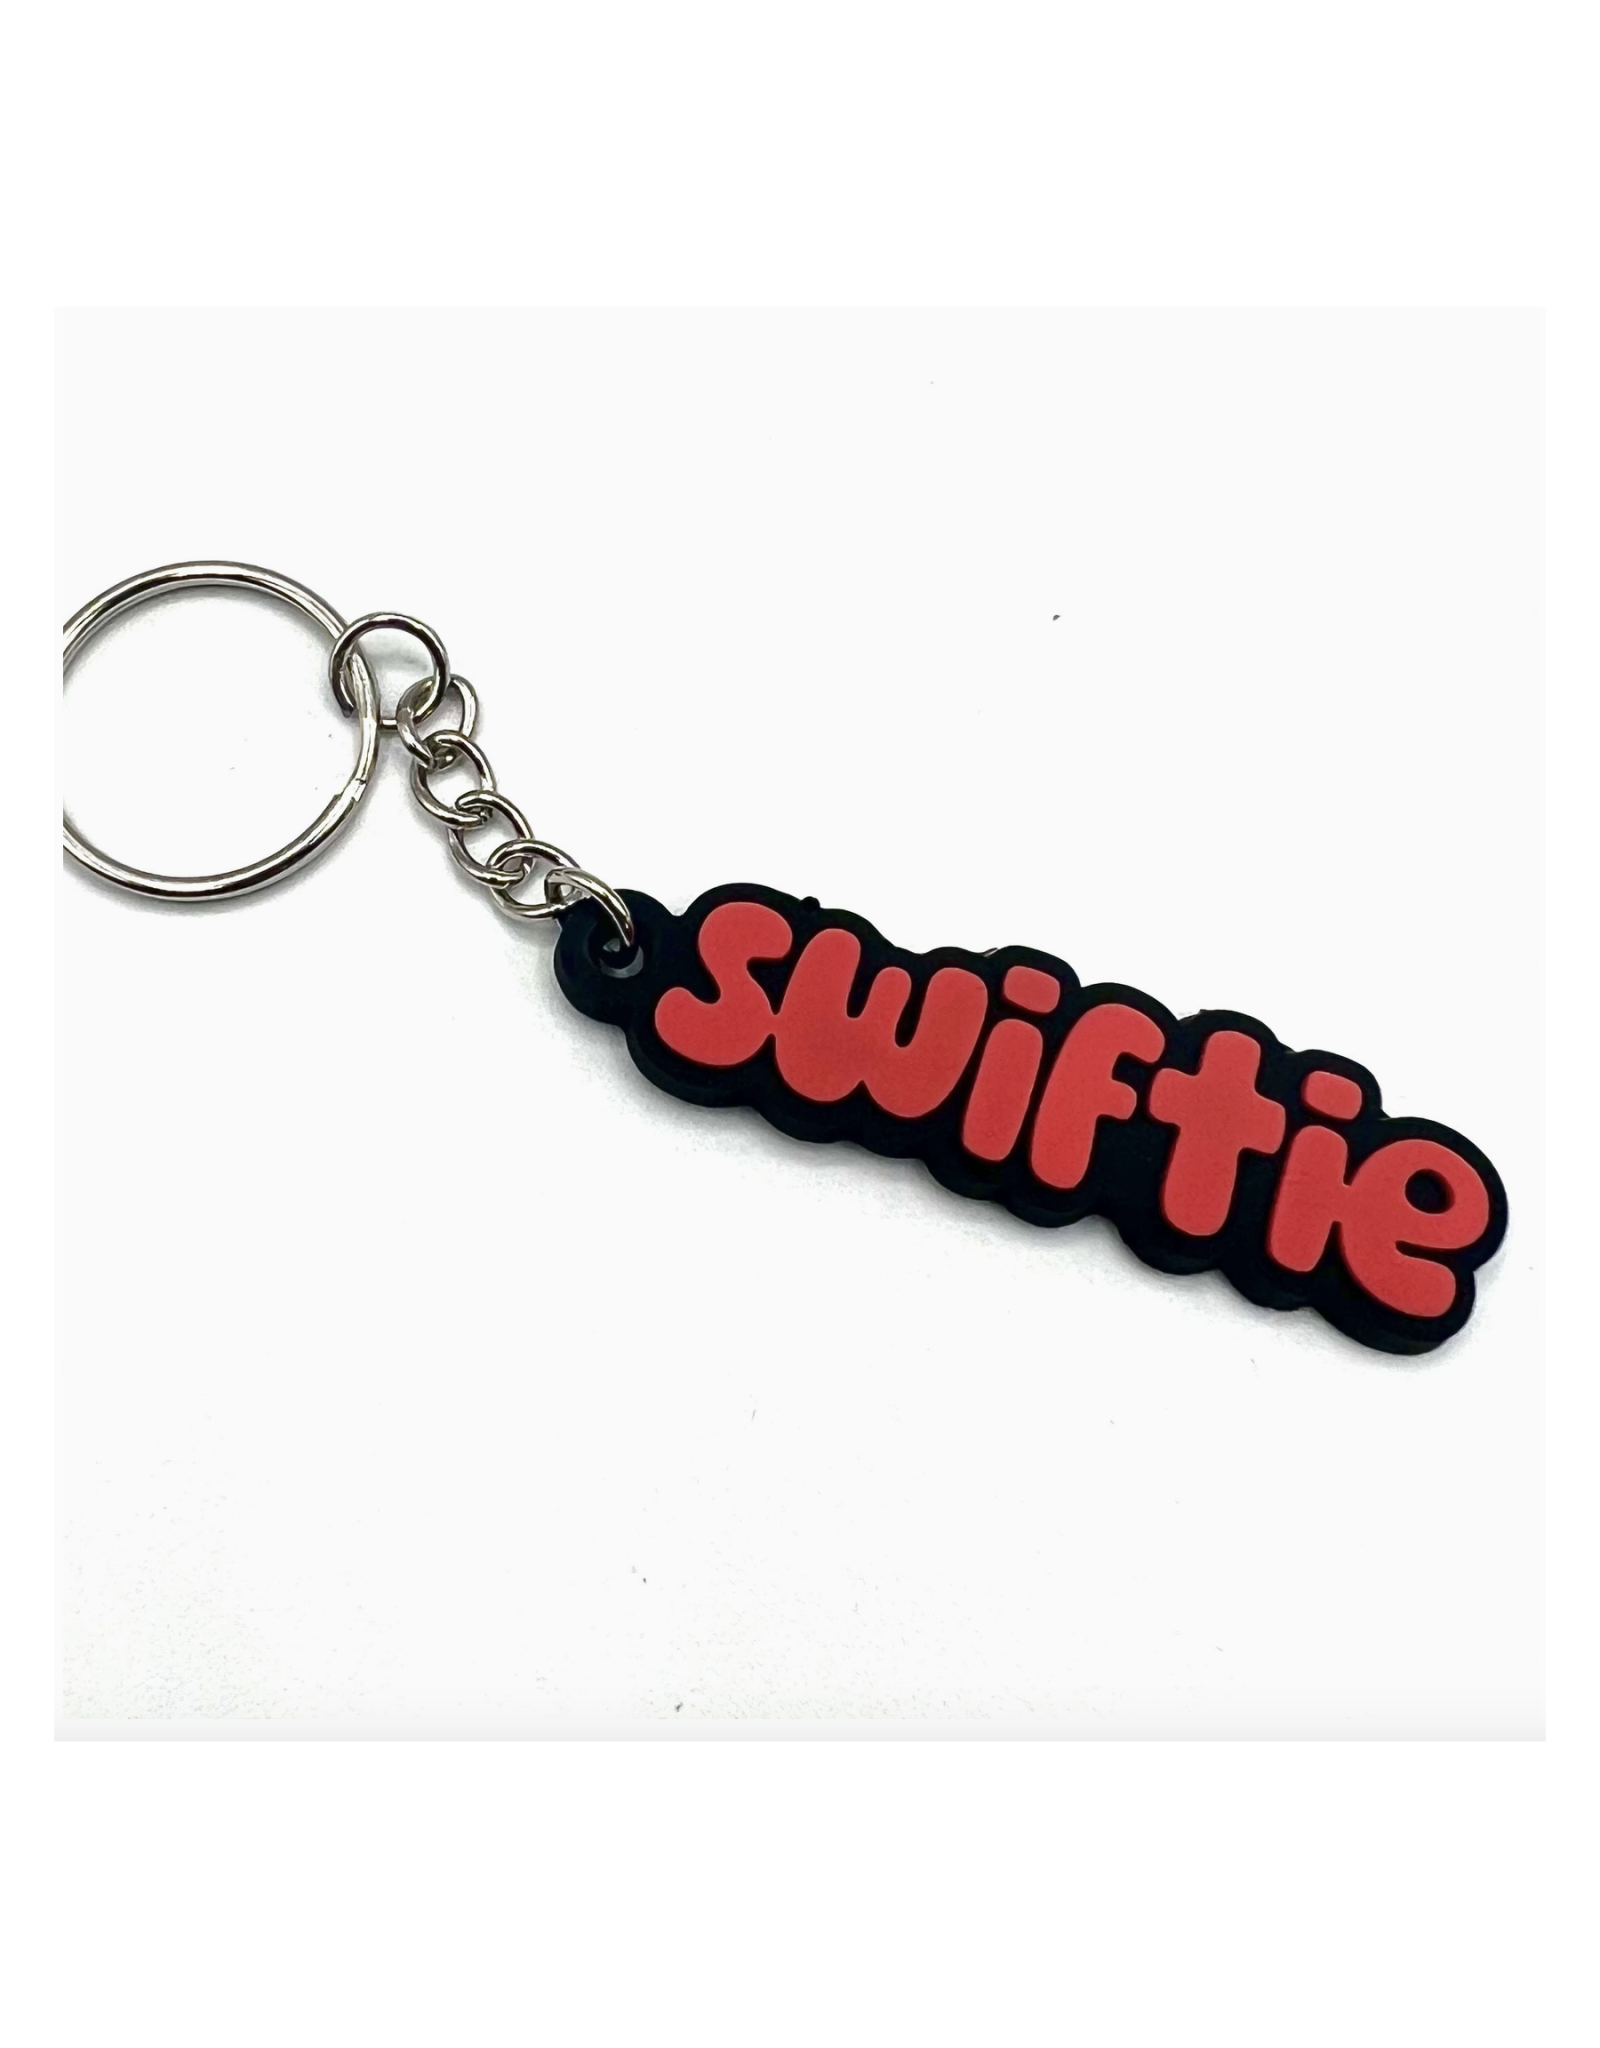 Swiftie Rubber Keychain